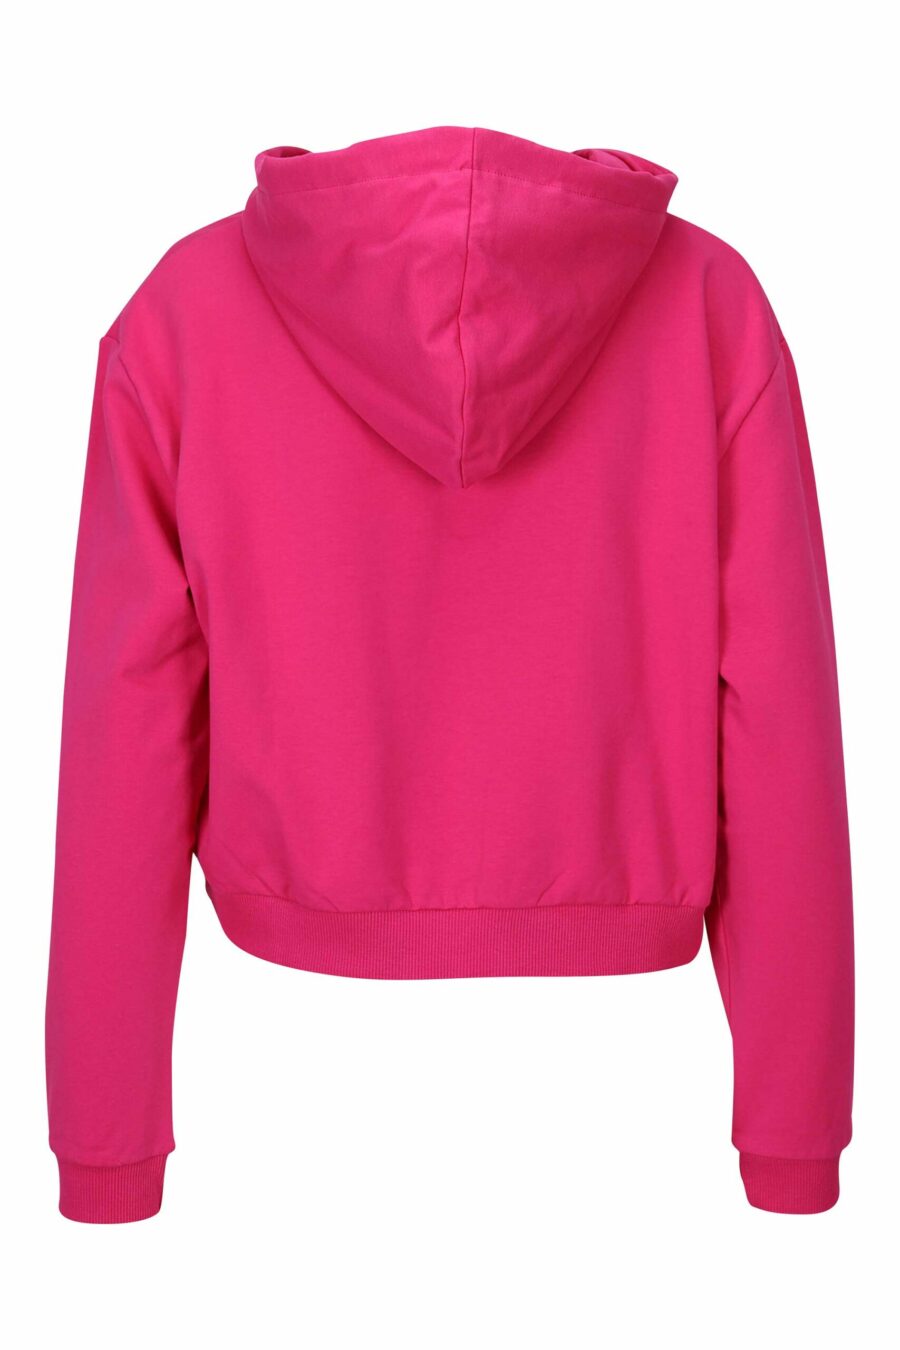 Fuchsia sweatshirt with hood and logo on pockets - 889316615234 1 scaled